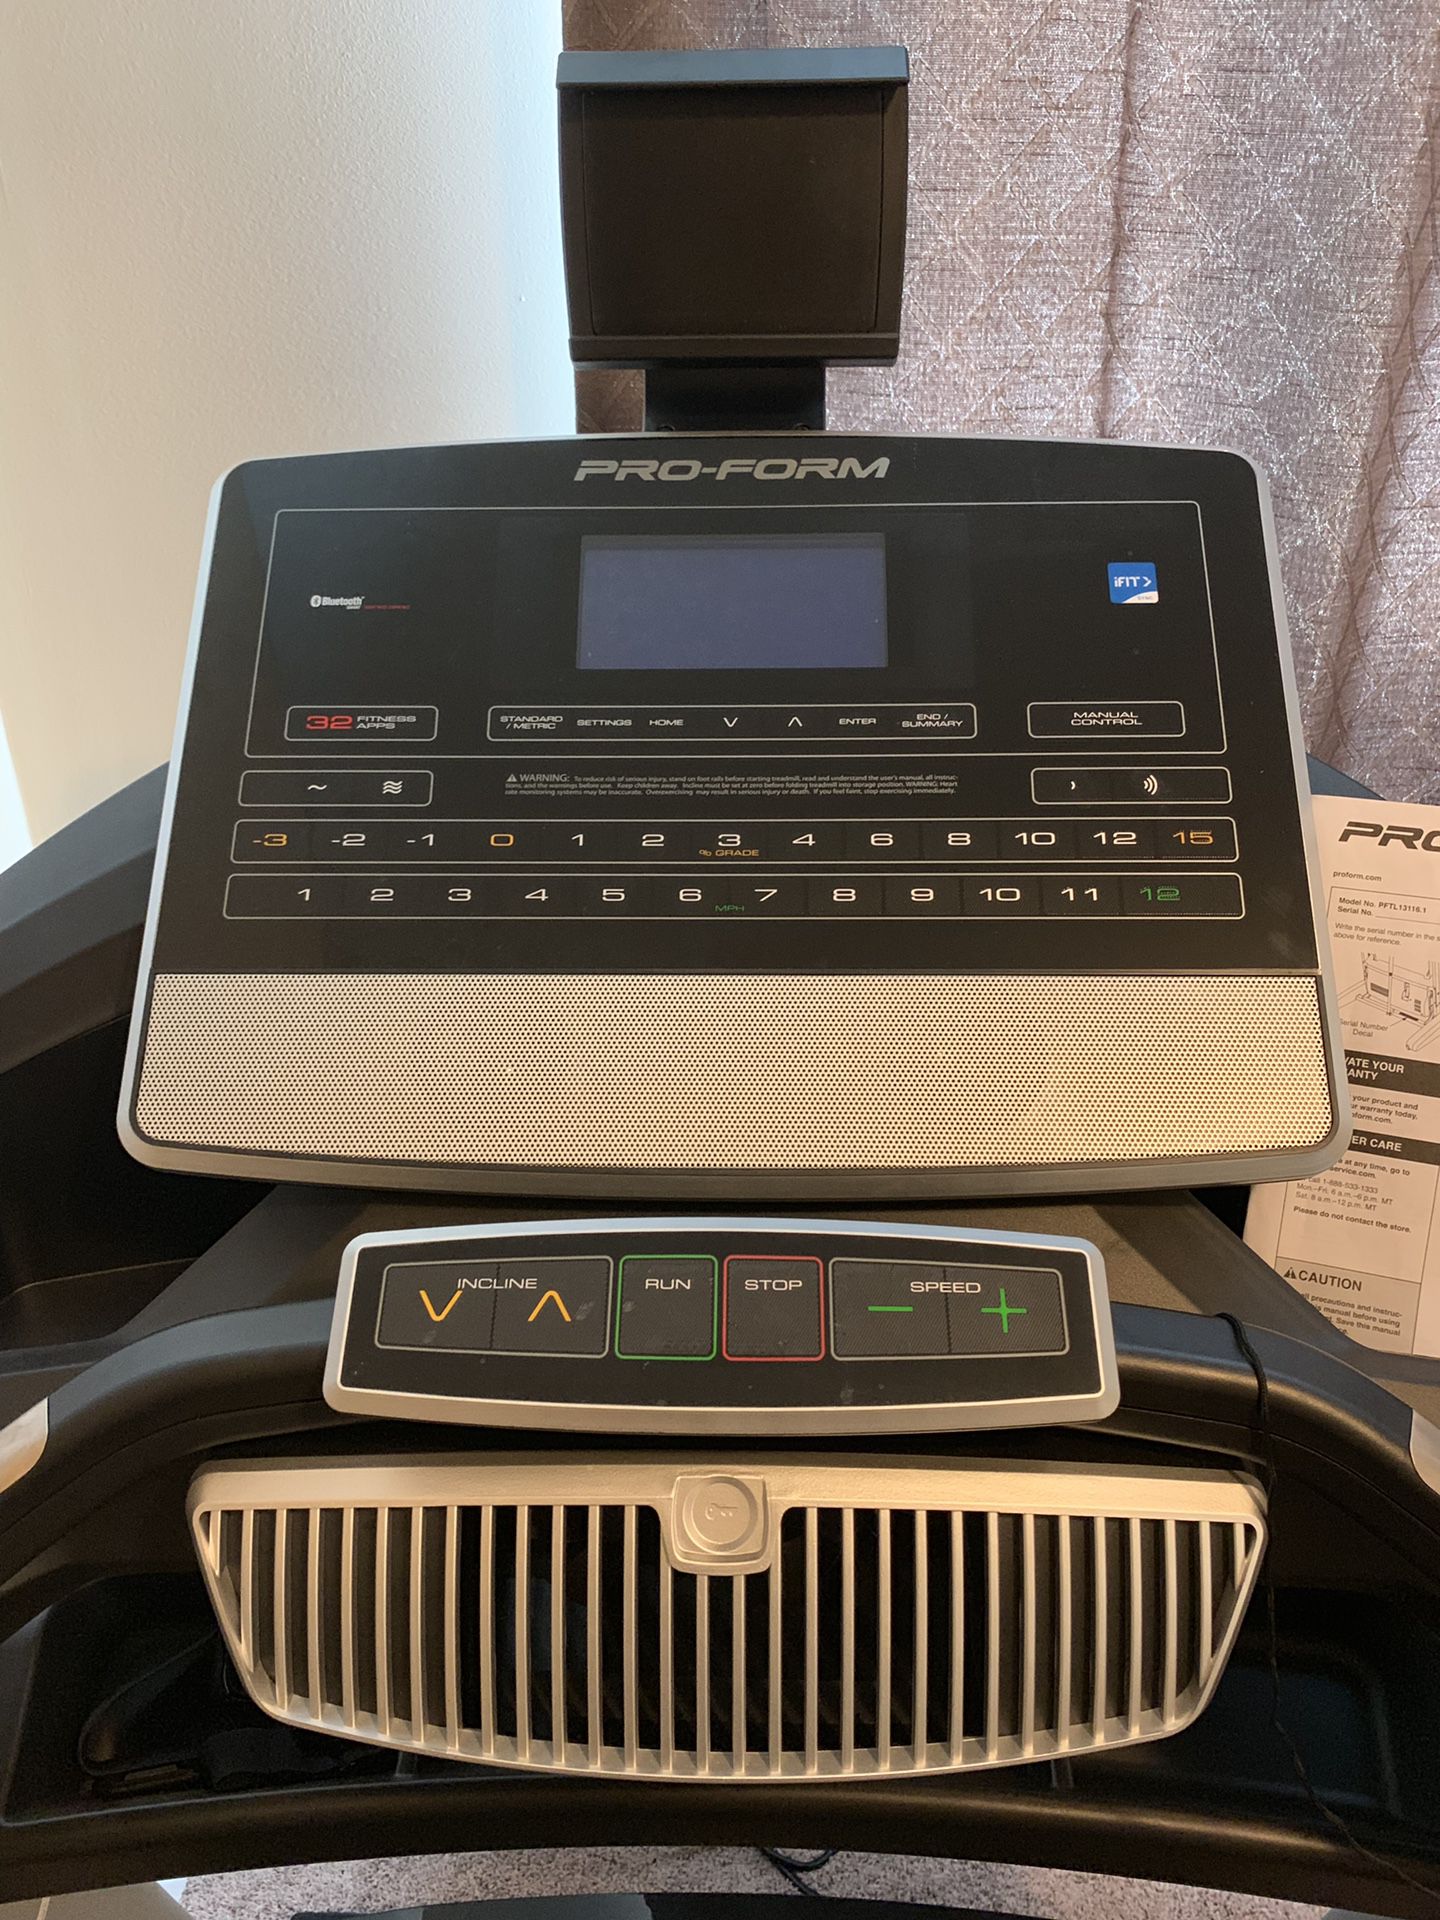 Proform 2000 treadmill